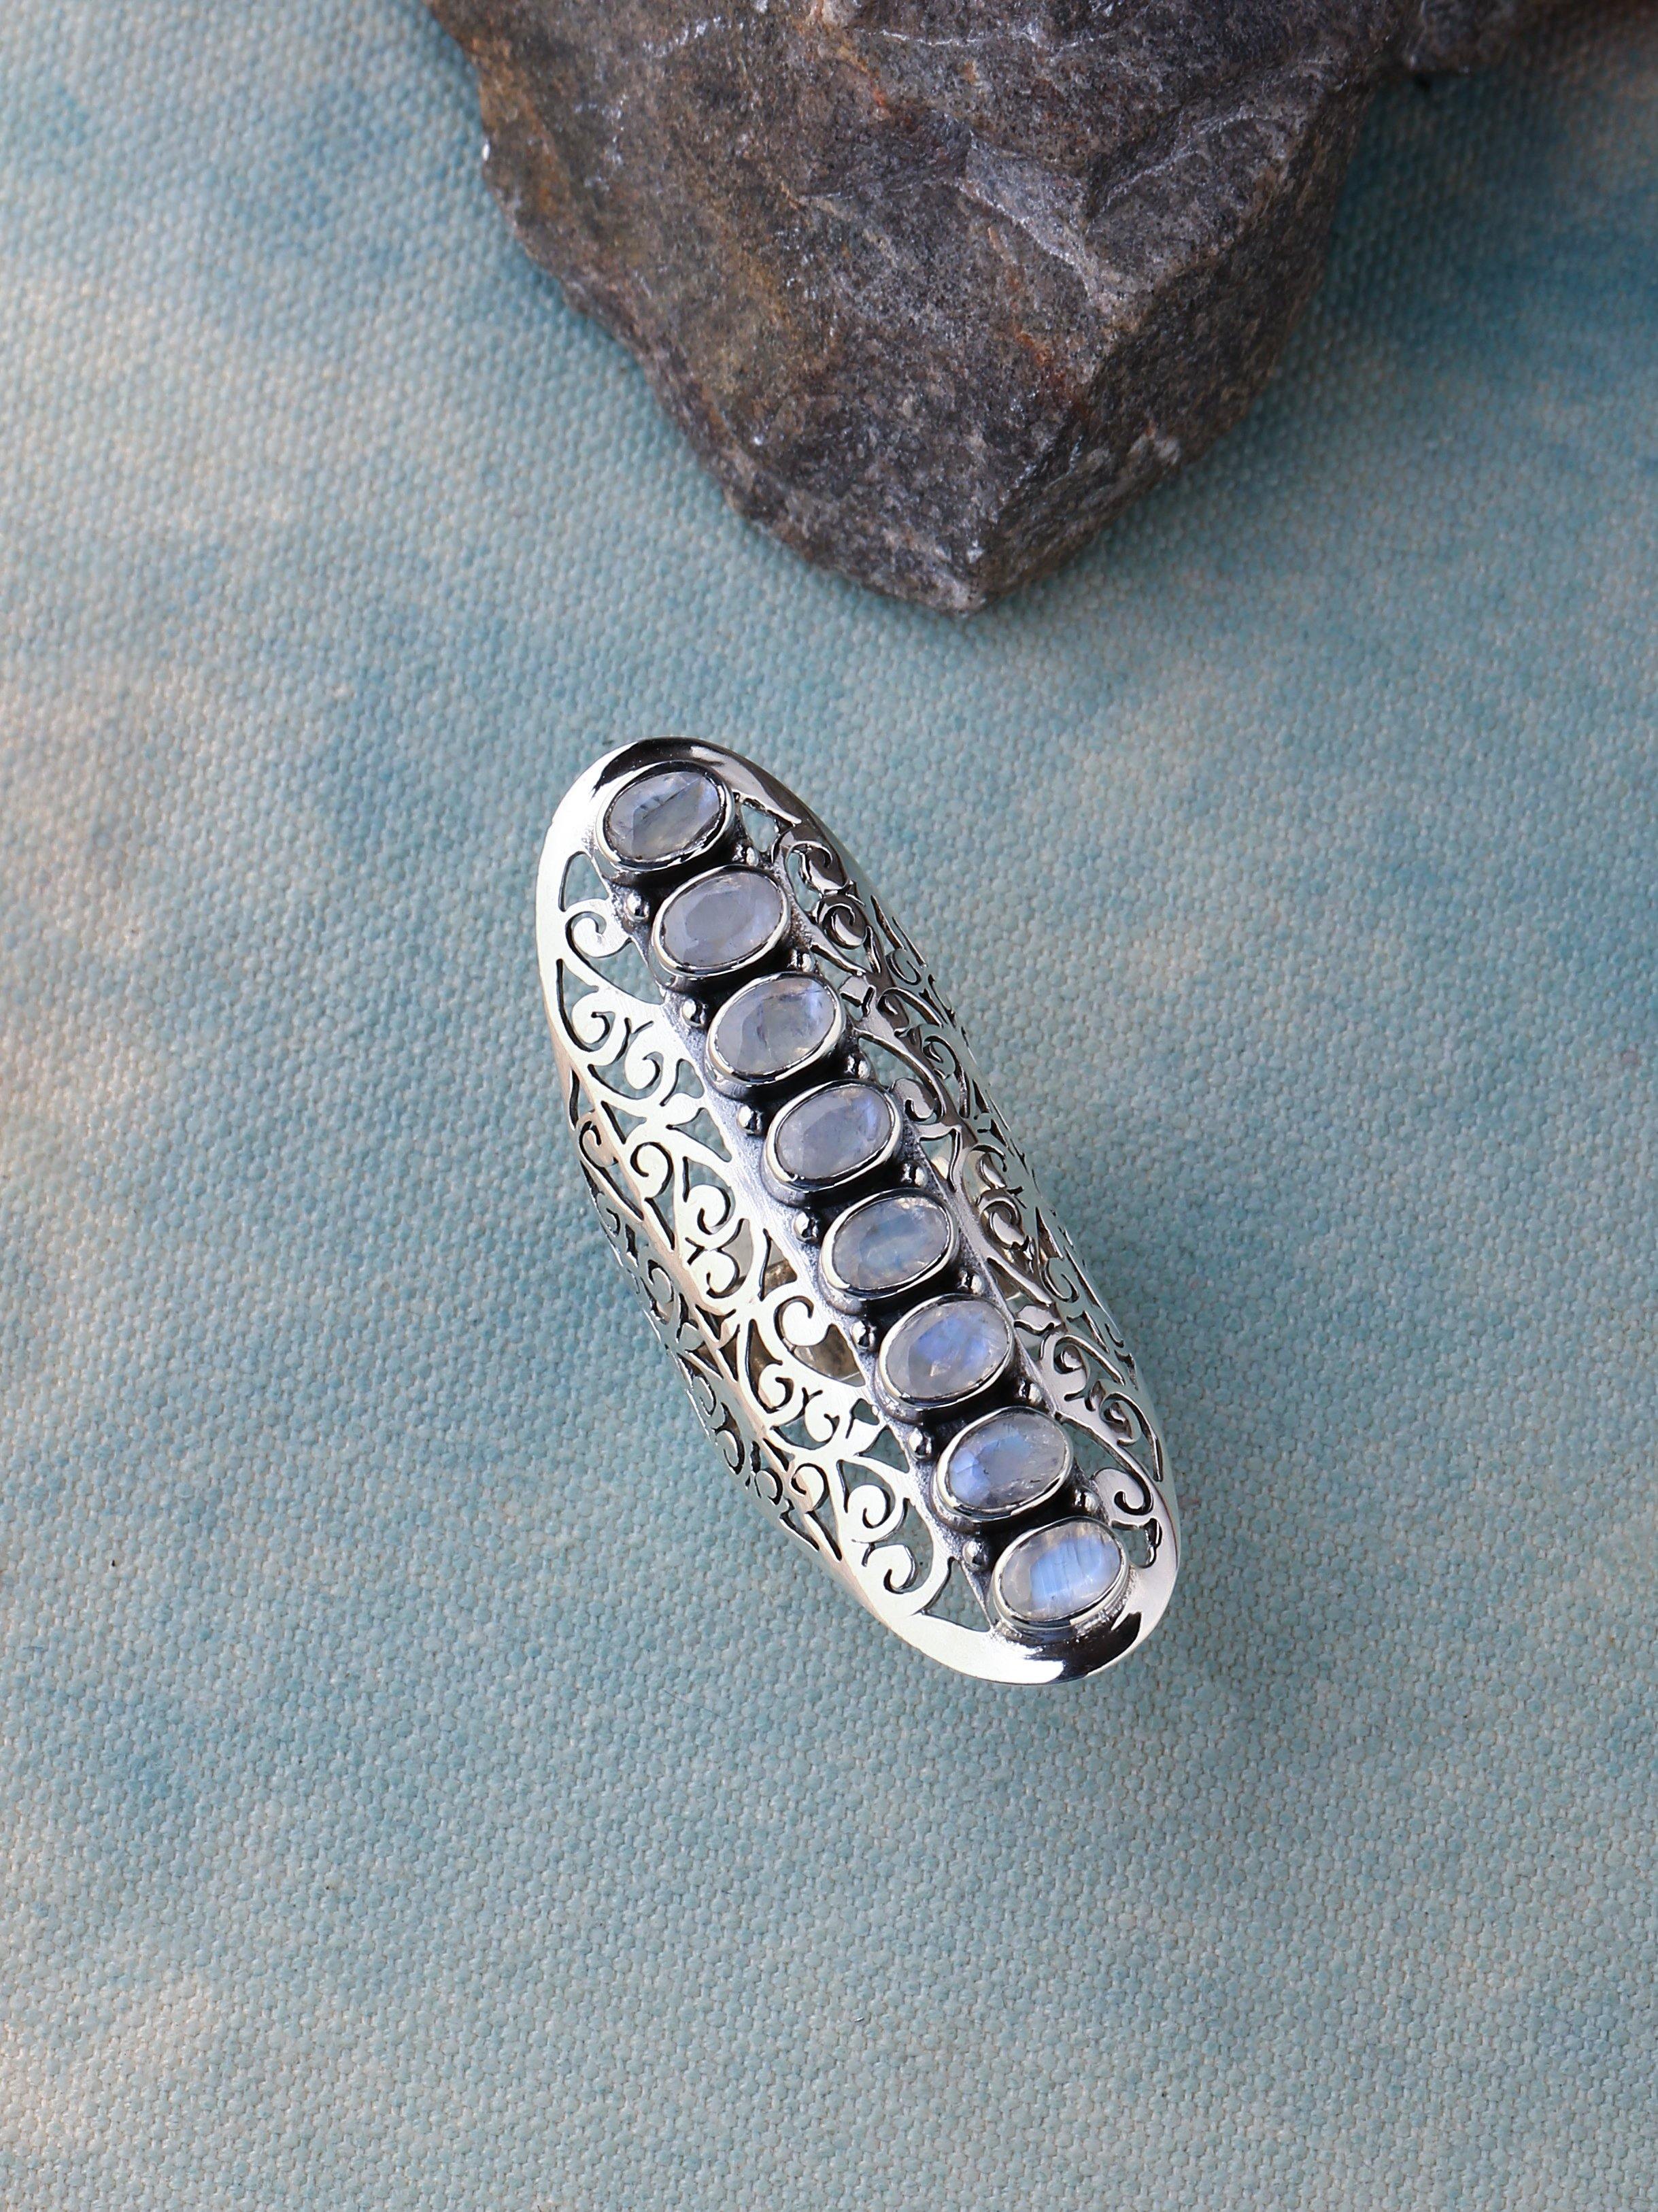 Rainbow Moonstone Solid 925 Sterling Silver Filigree Ring Jewelry - YoTreasure